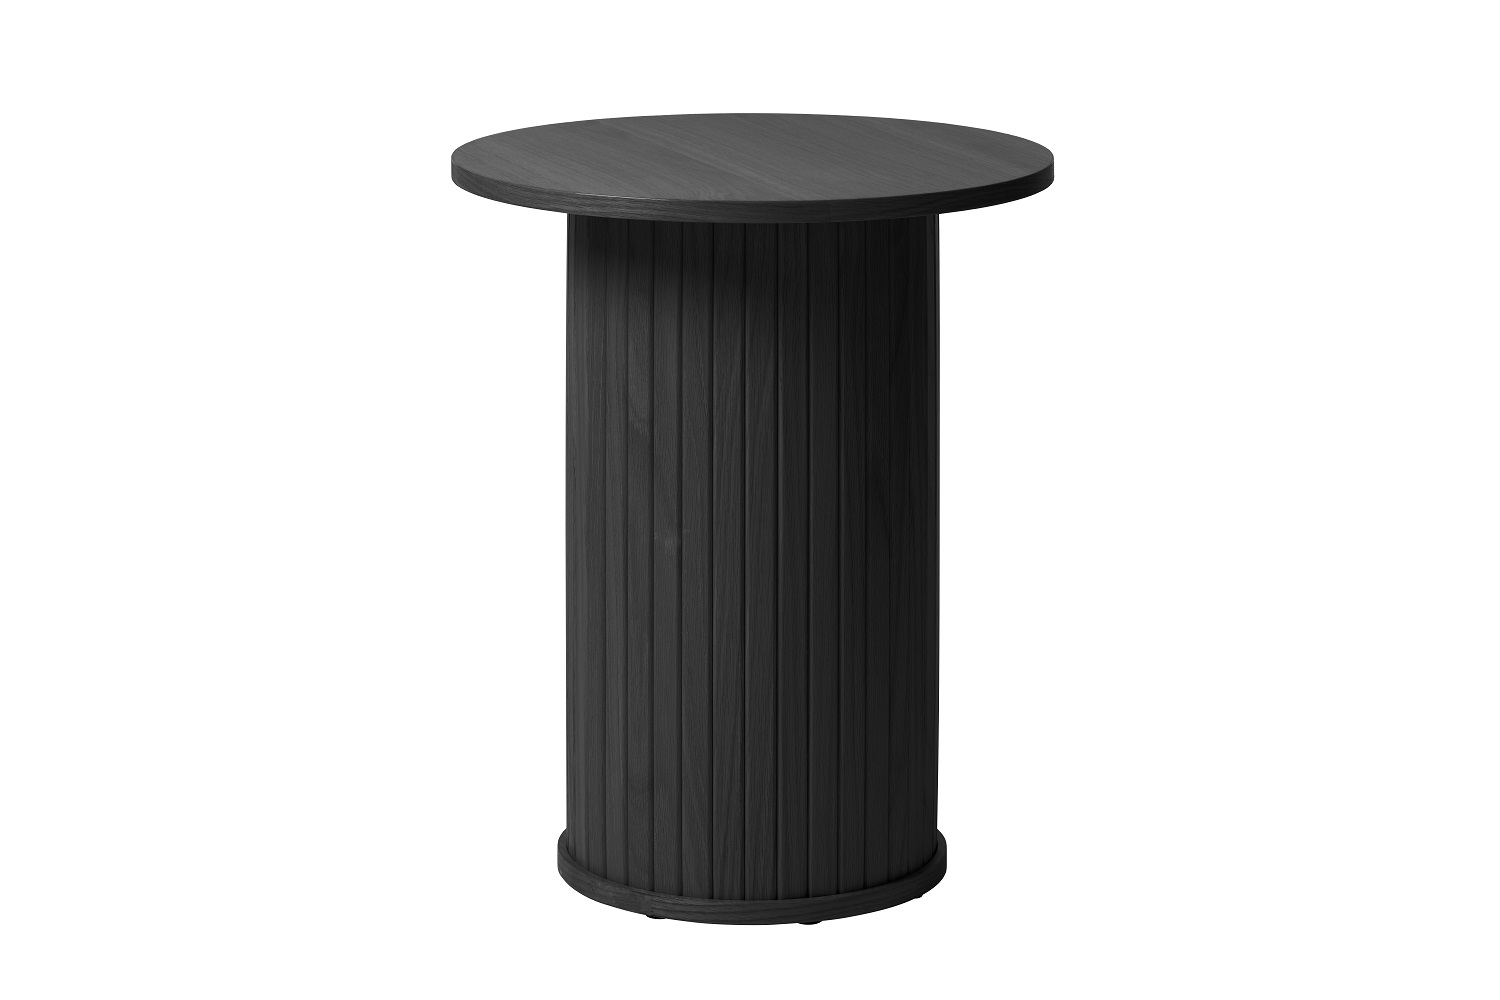 Furniria Designový odkládací stolek Vasiliy 50 cm černý dub